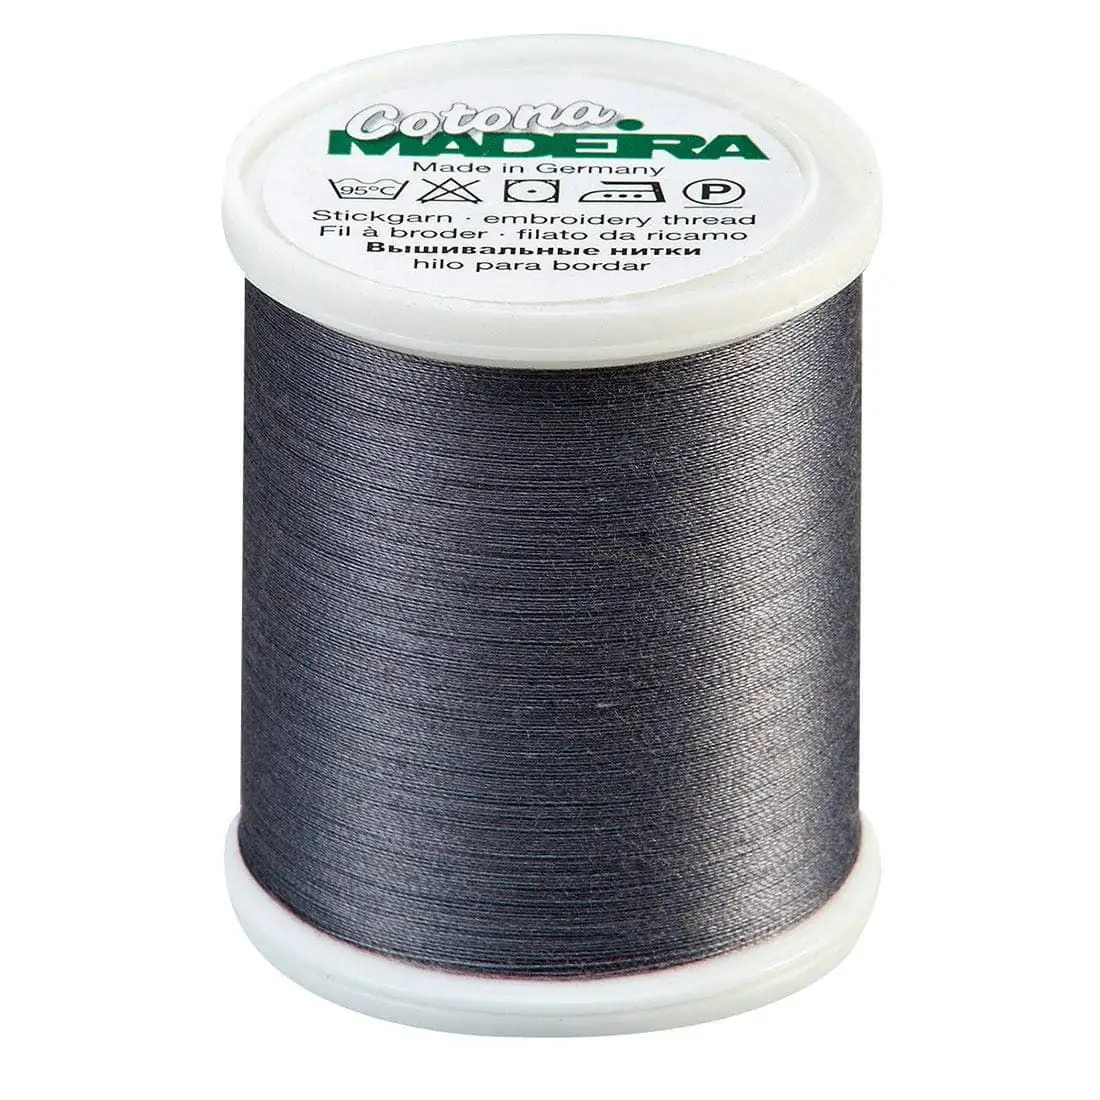 Madeira Cotona 50wt Cotton - 729 Dark Grey